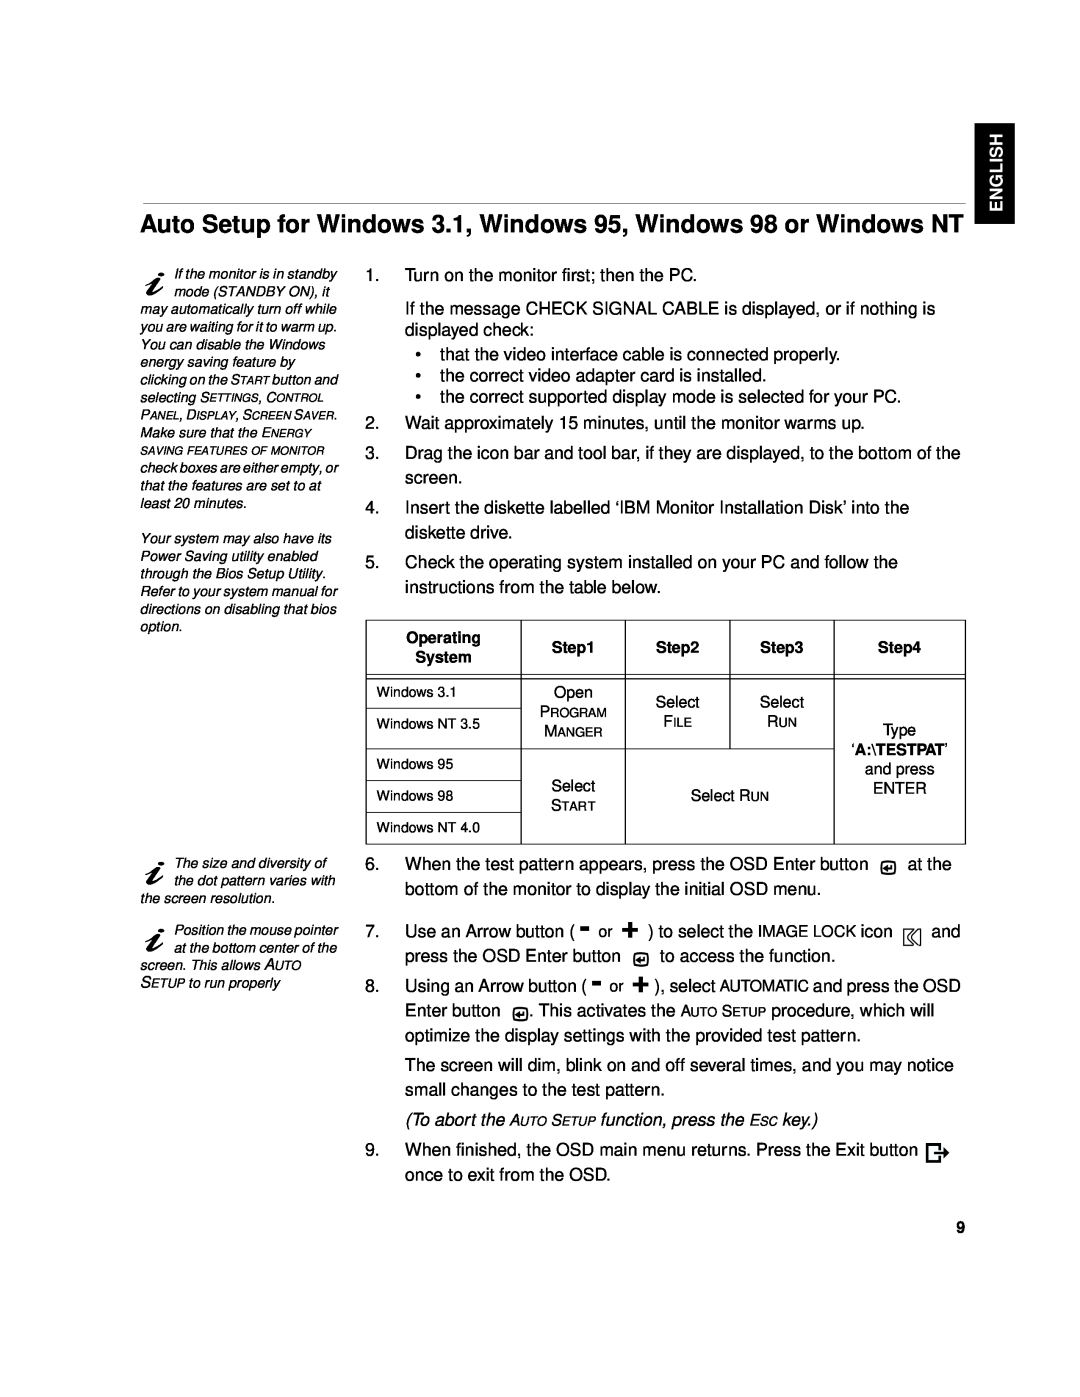 IBM 9519-AW1, 9519-AG1, T 85A, 21L4365 Auto Setup for Windows 3.1, Windows 95, Windows 98 or Windows NT, English 